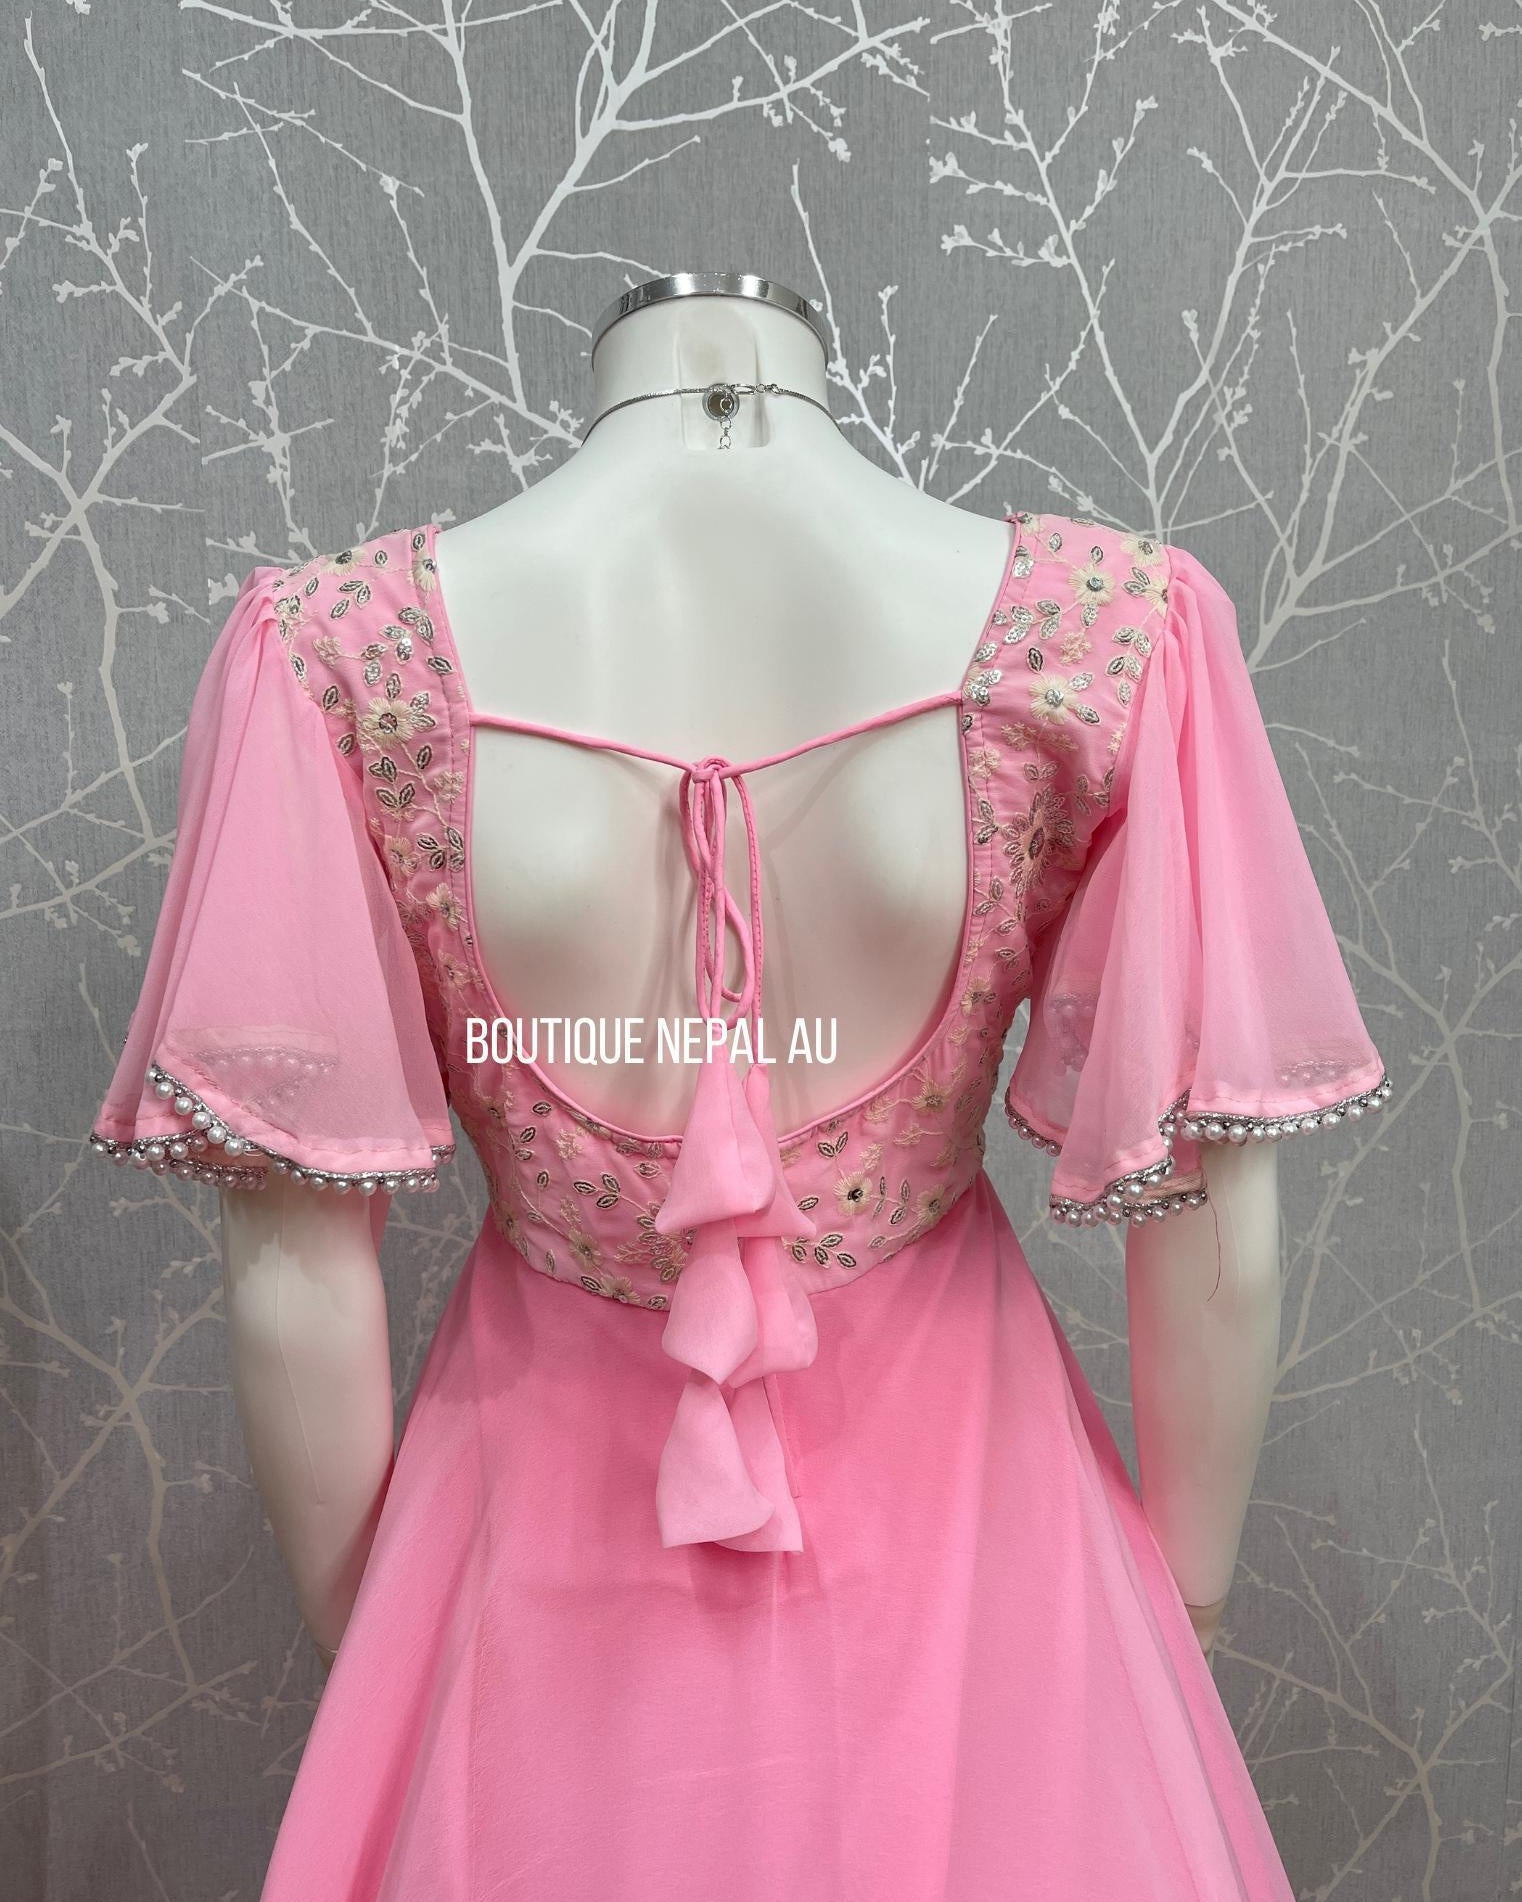 Pink Gown - Boutique Nepal Au